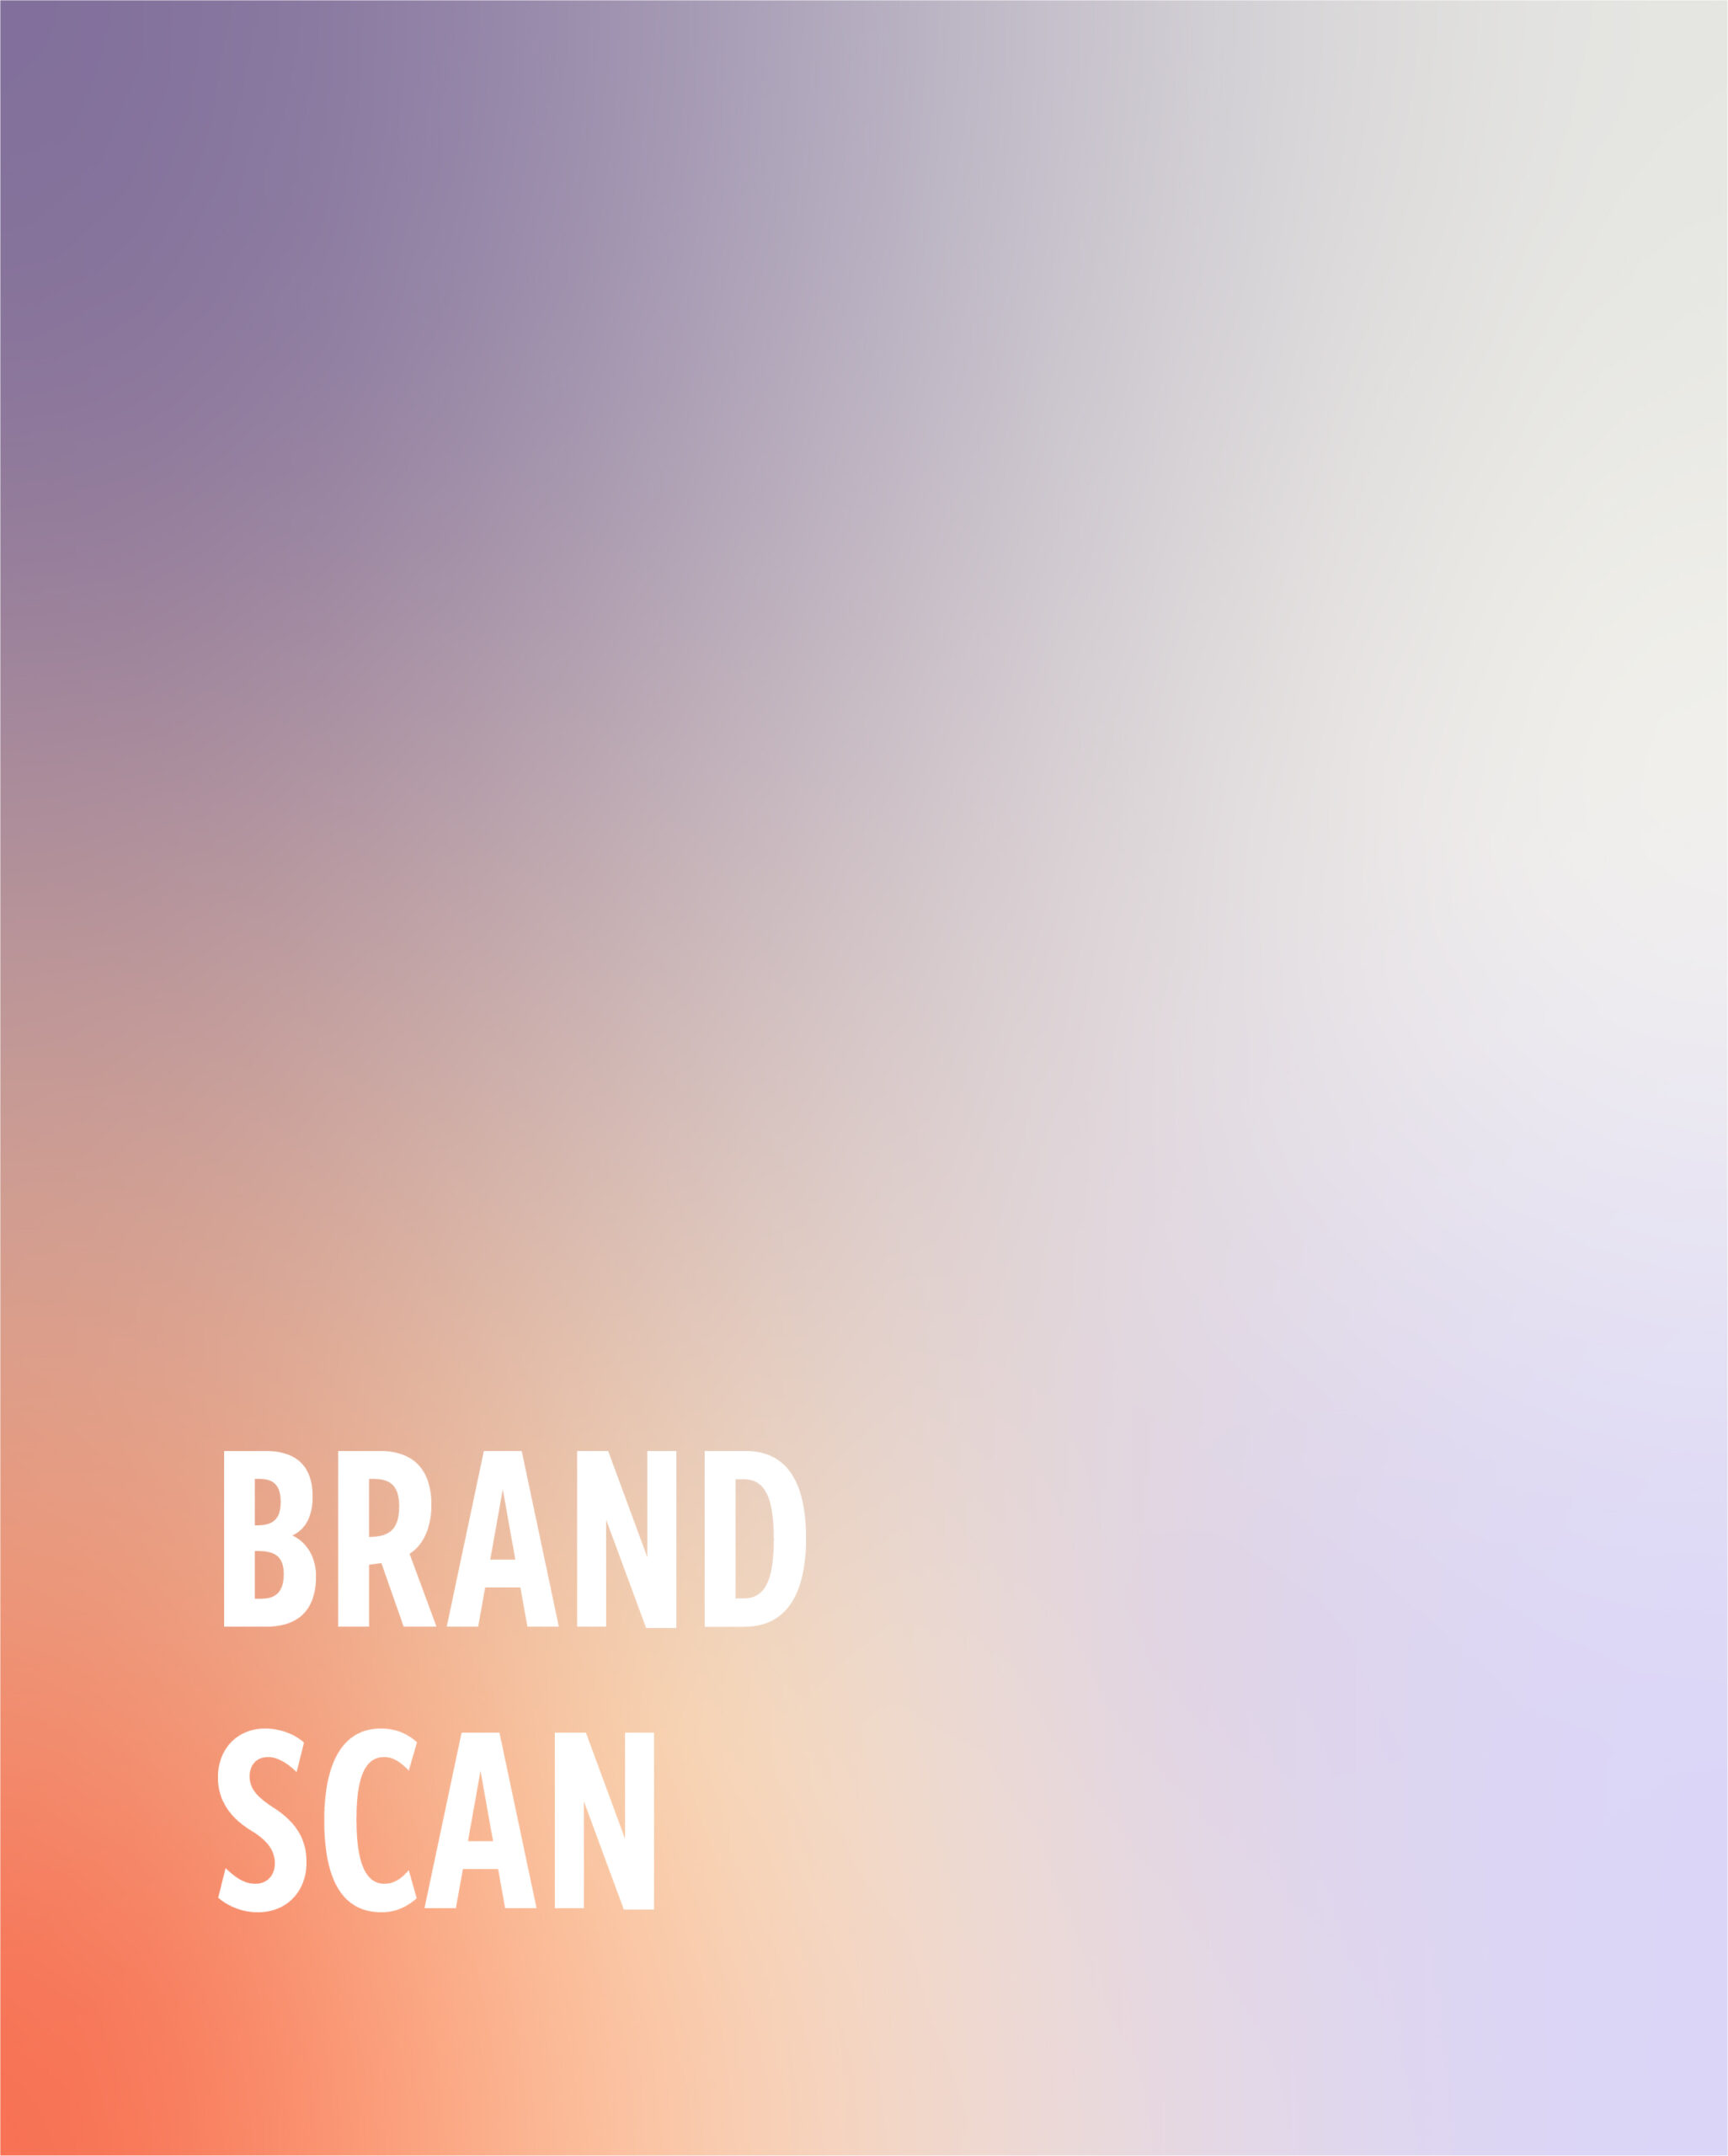 Studio Lianne Koster - Brand Scan